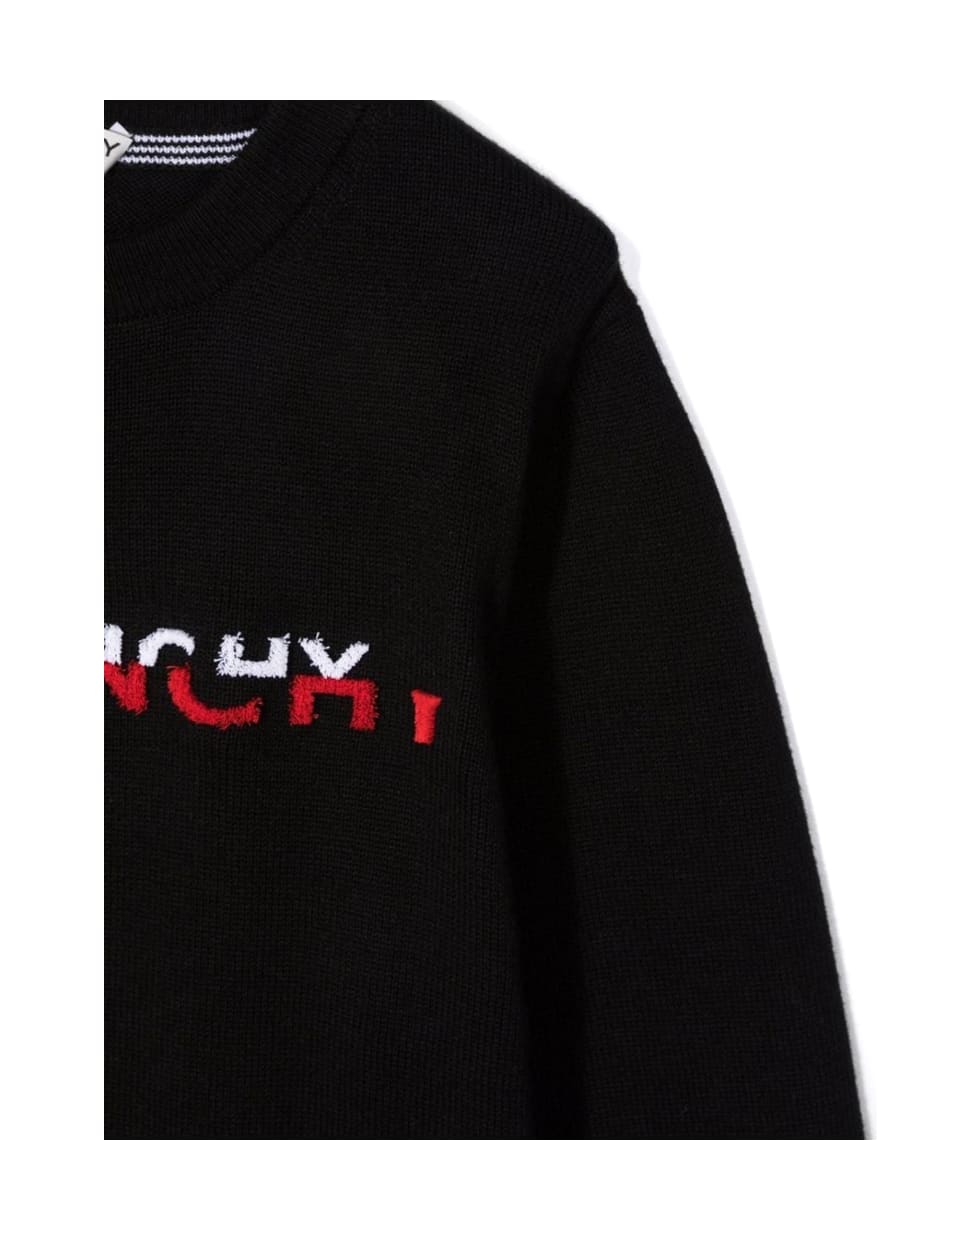 Givenchy Black Cotton-cashmere Blend Sweatshirt - Nero